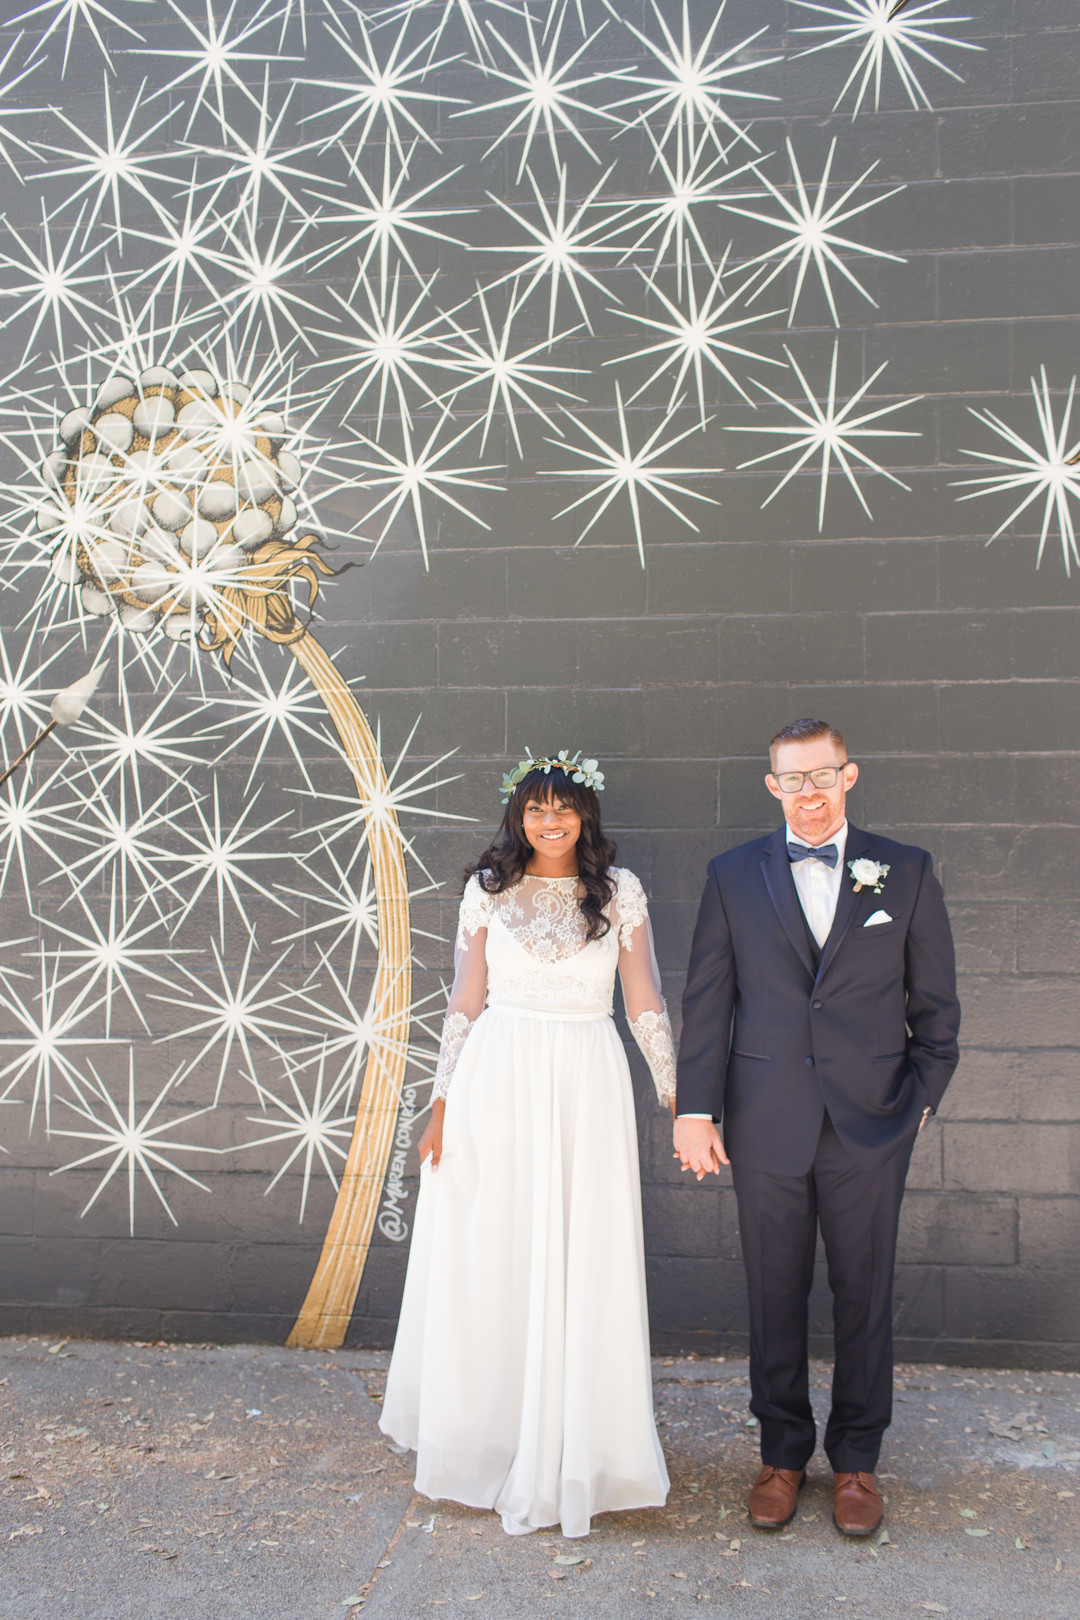 Studio 817 Wedding, Sacramento Wedding, Minimalist Wedding, dandelion mural wall wedding photos